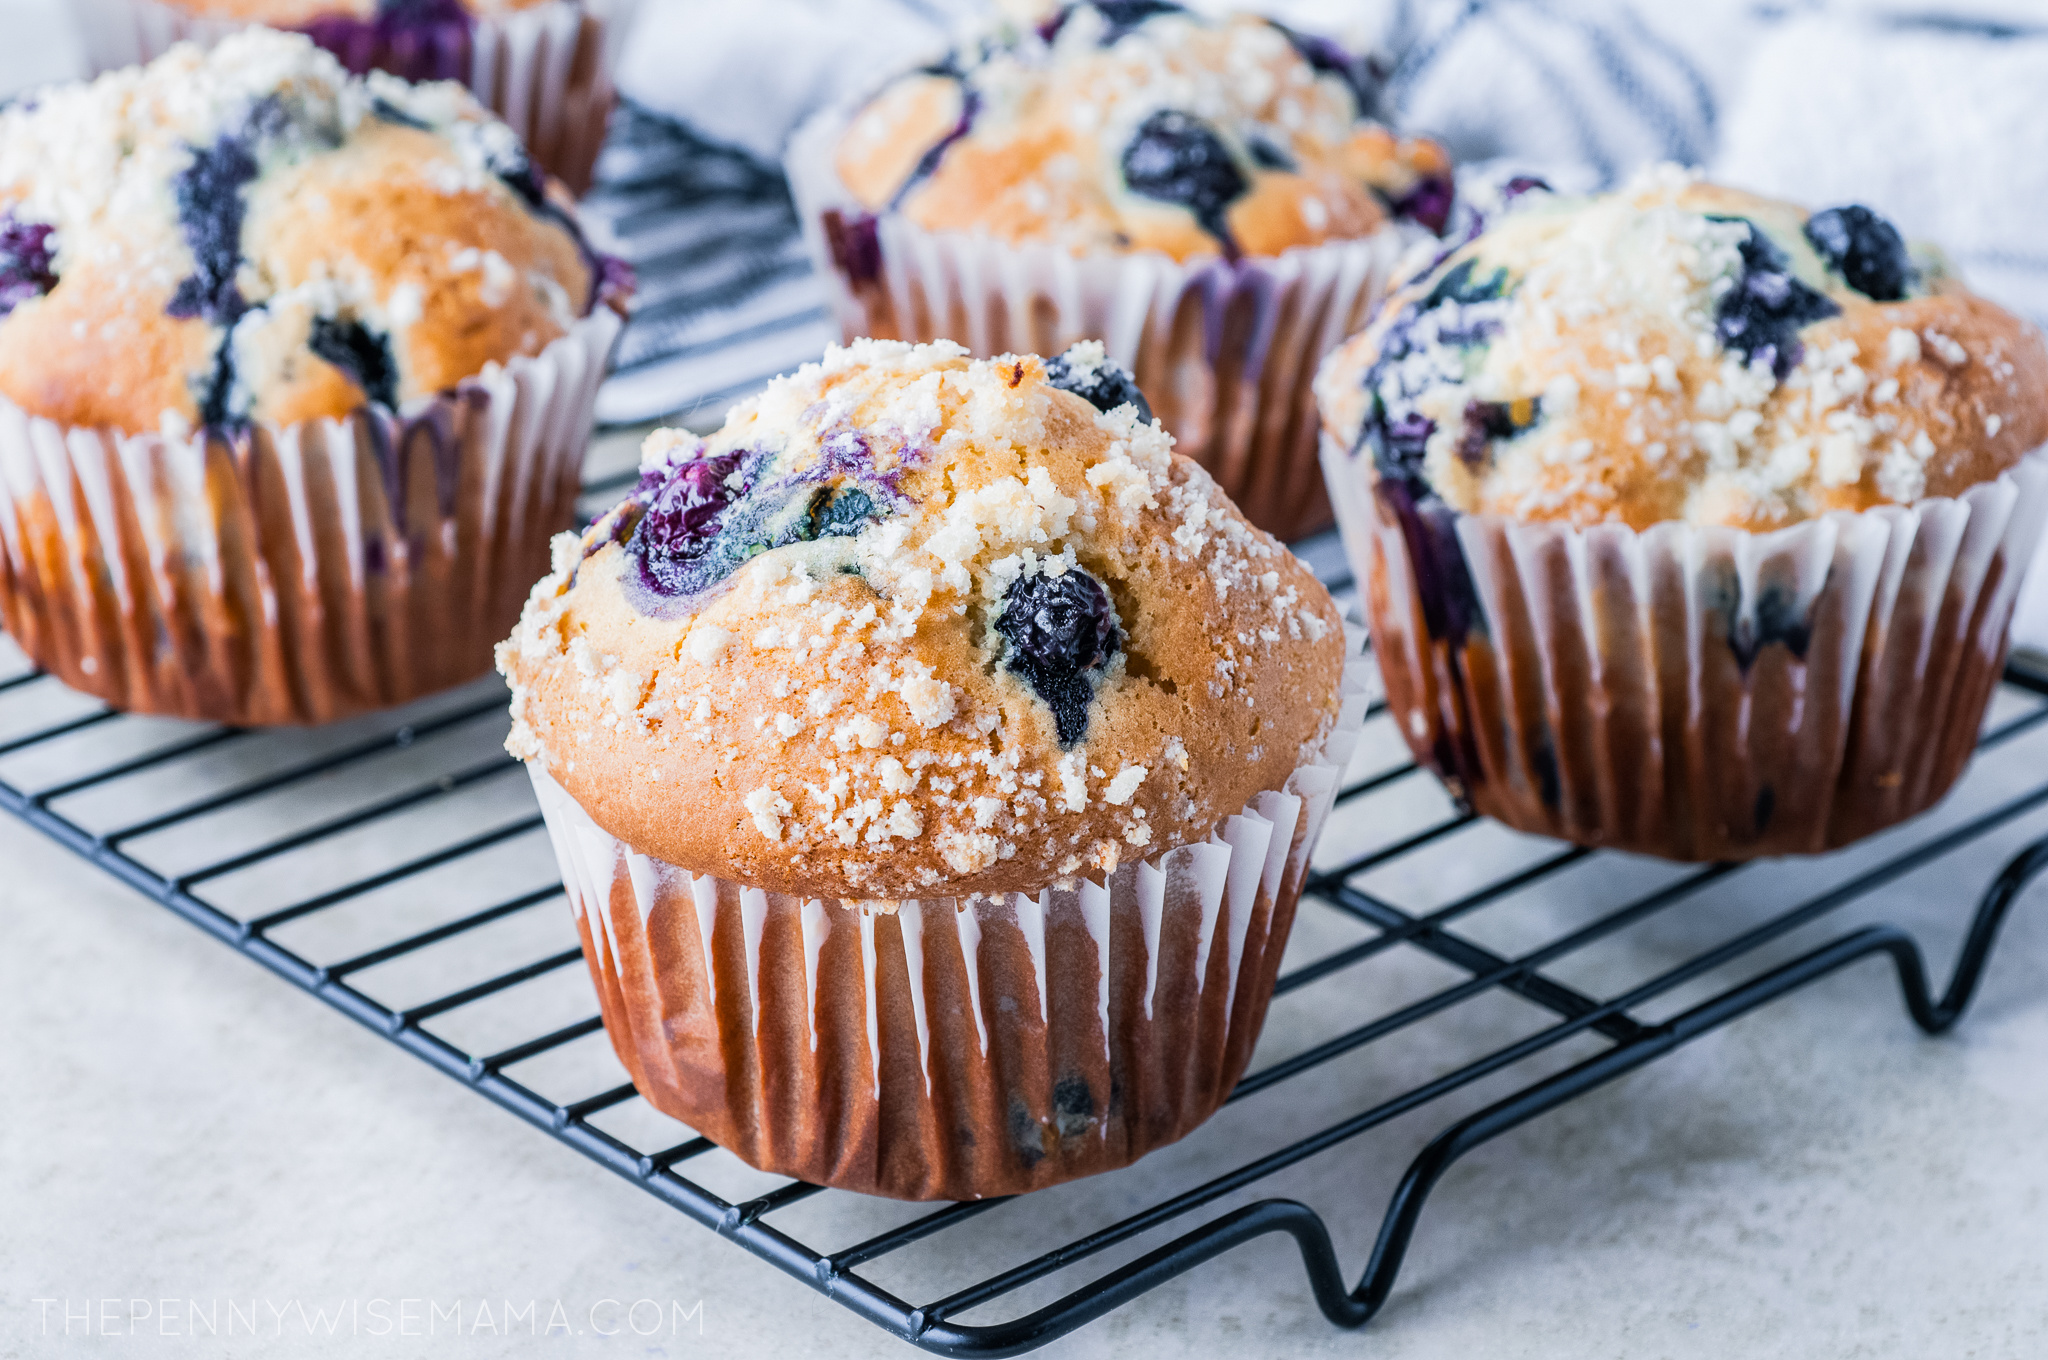 How to Make Jumbo Lemon Blueberry Muffins